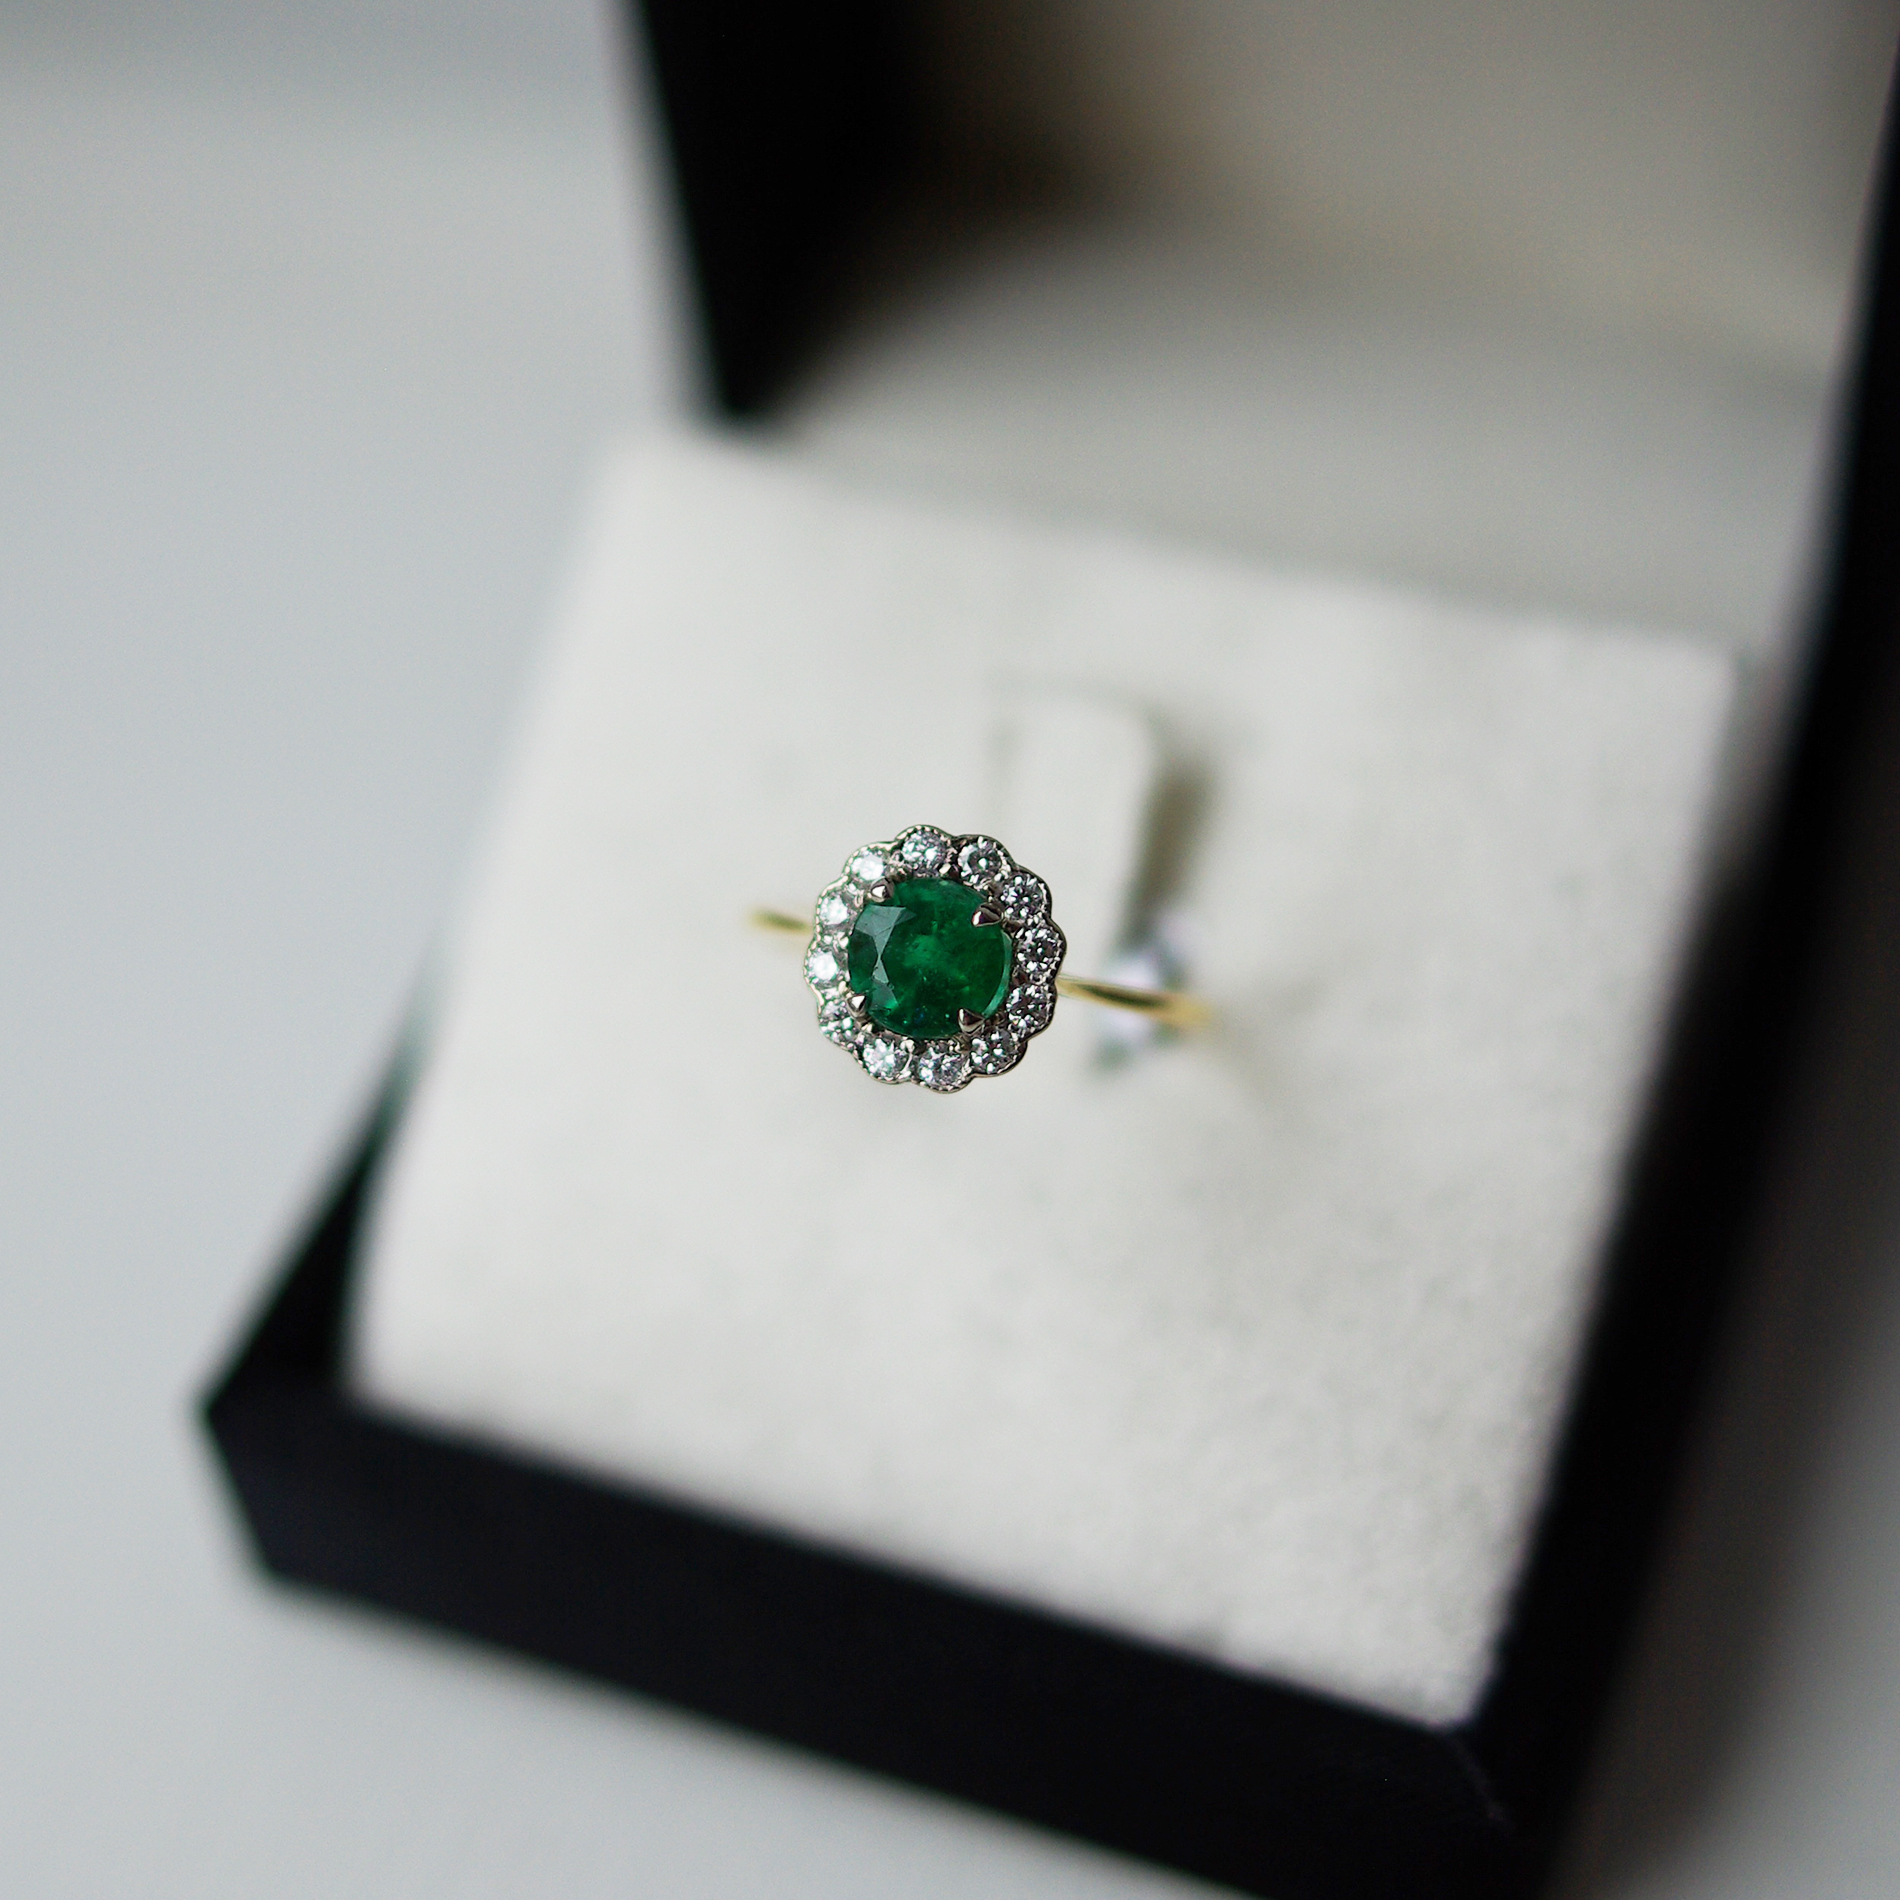 Round Brilliant Cut Emerald With a Diamond Halo Ring